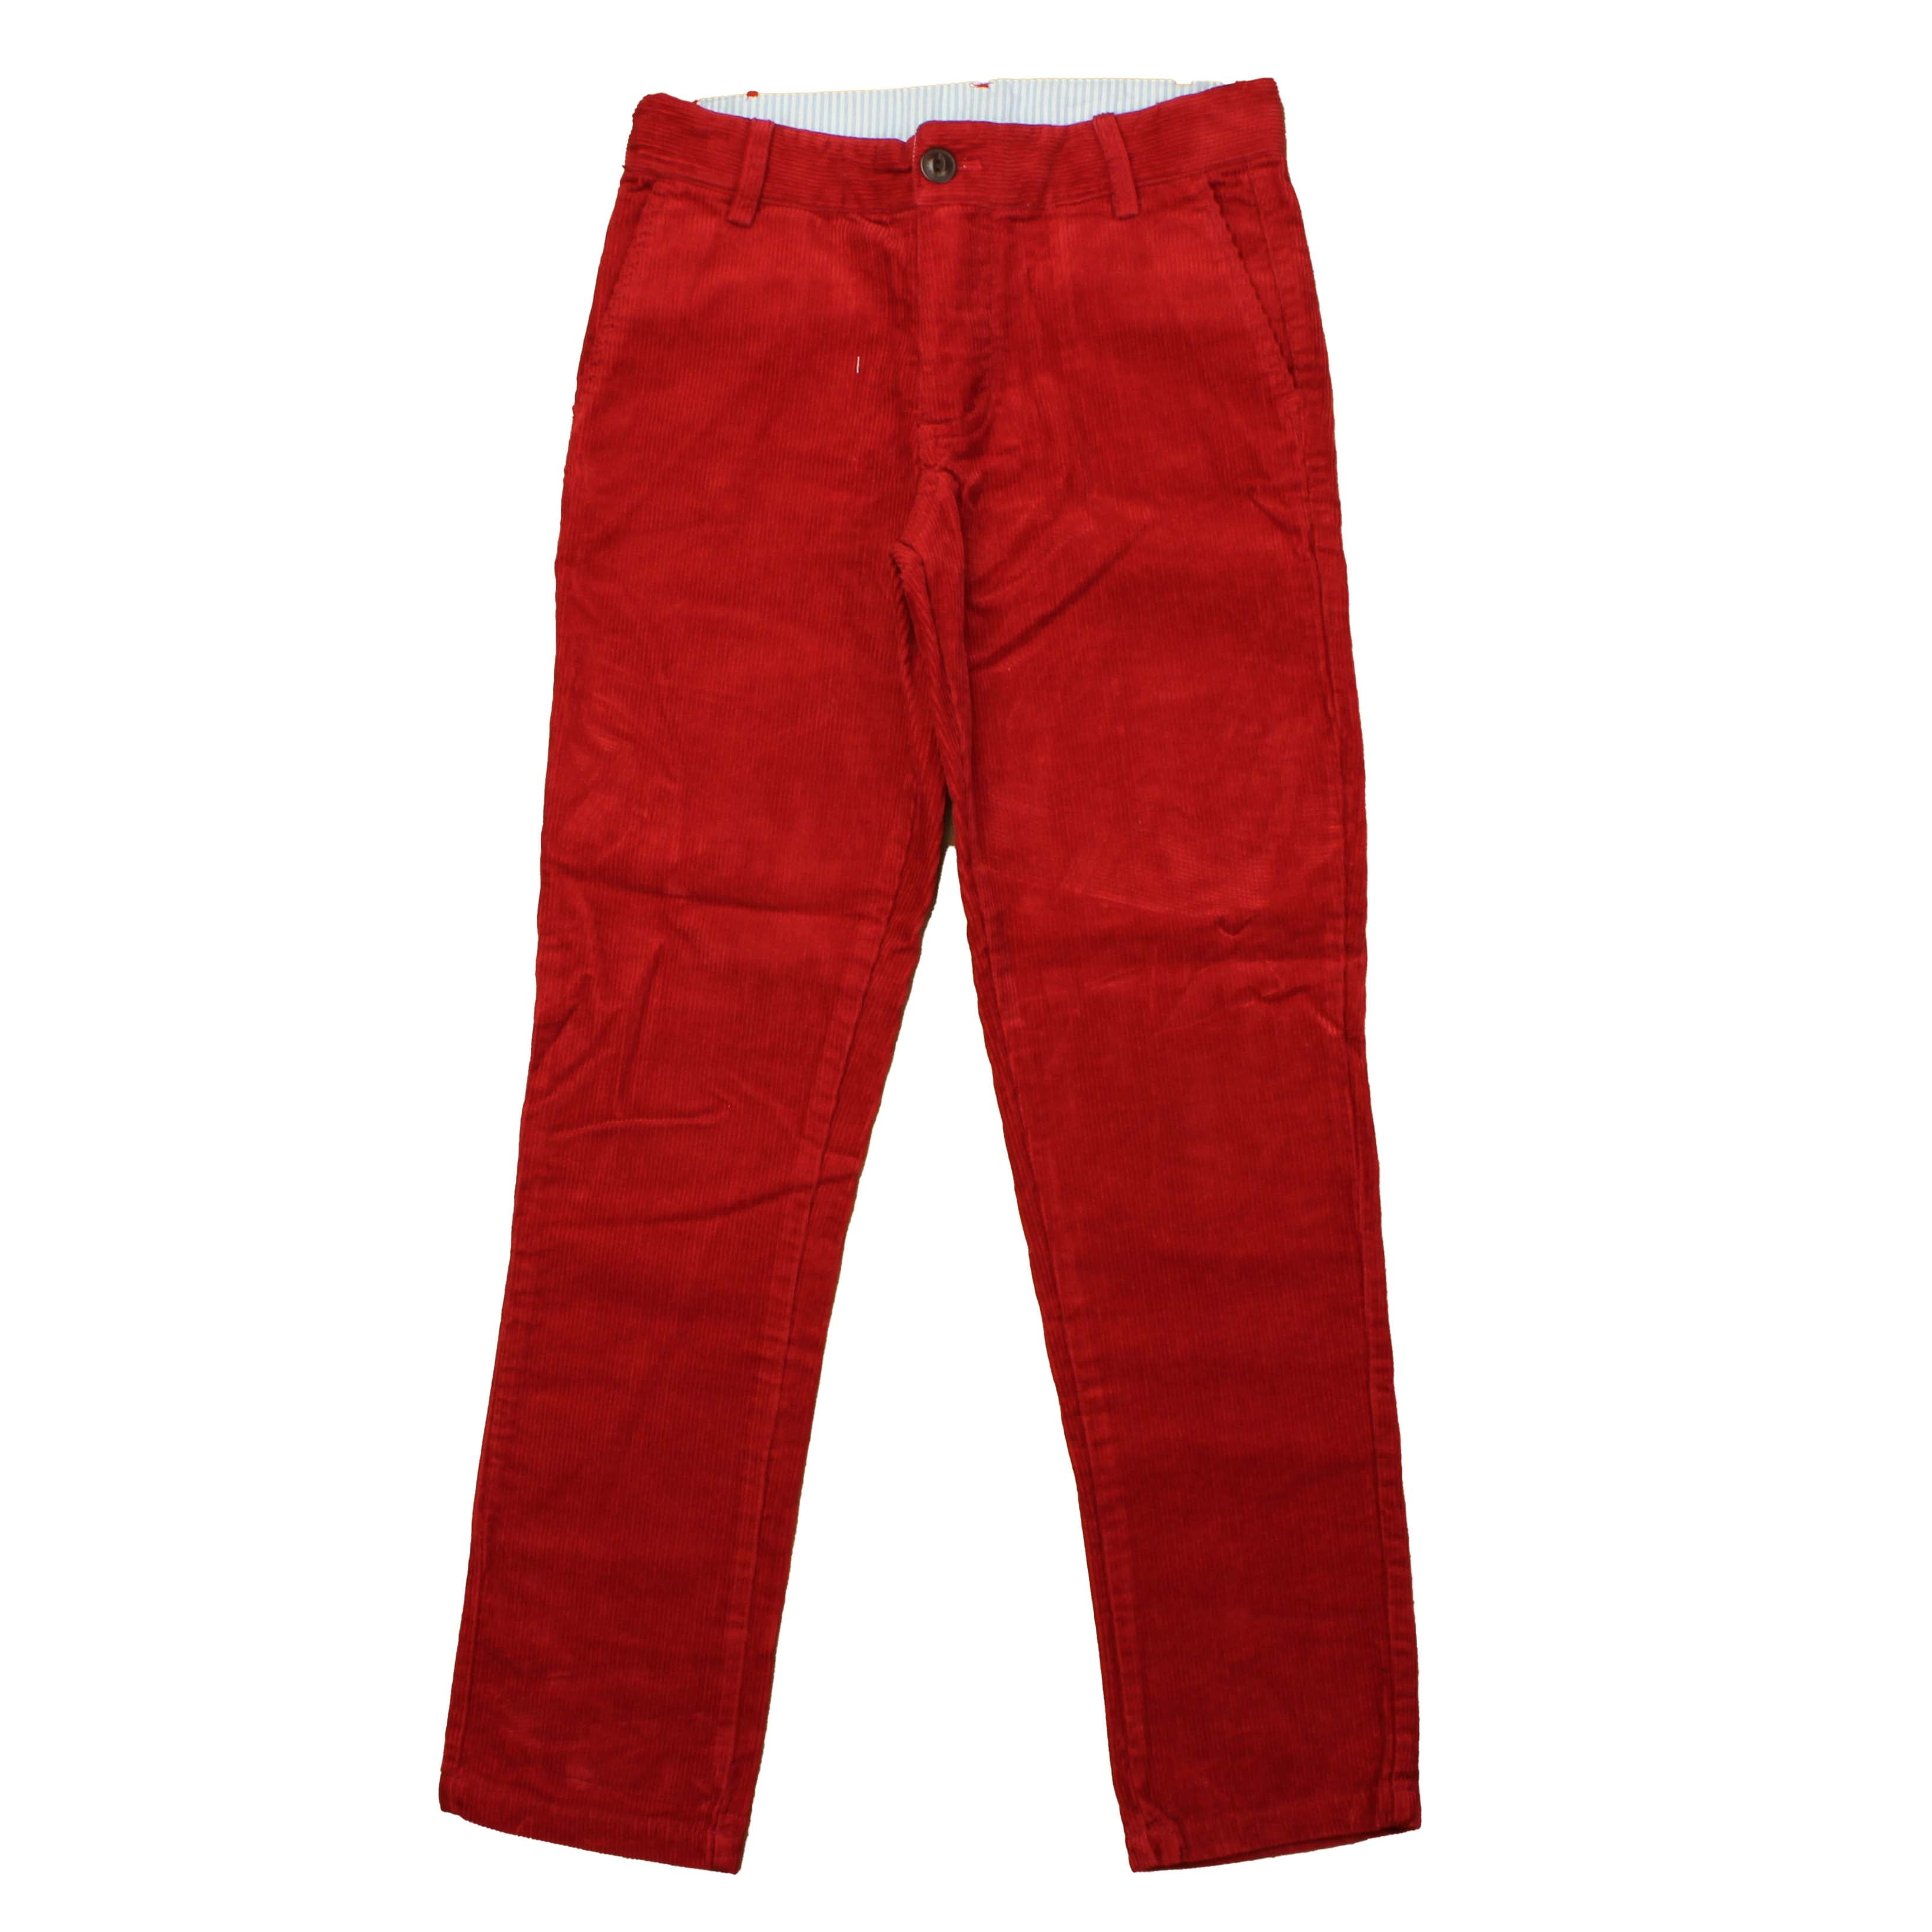 Pre-owned Jacadi Boys Red Corduroy Pants size: 10 Years